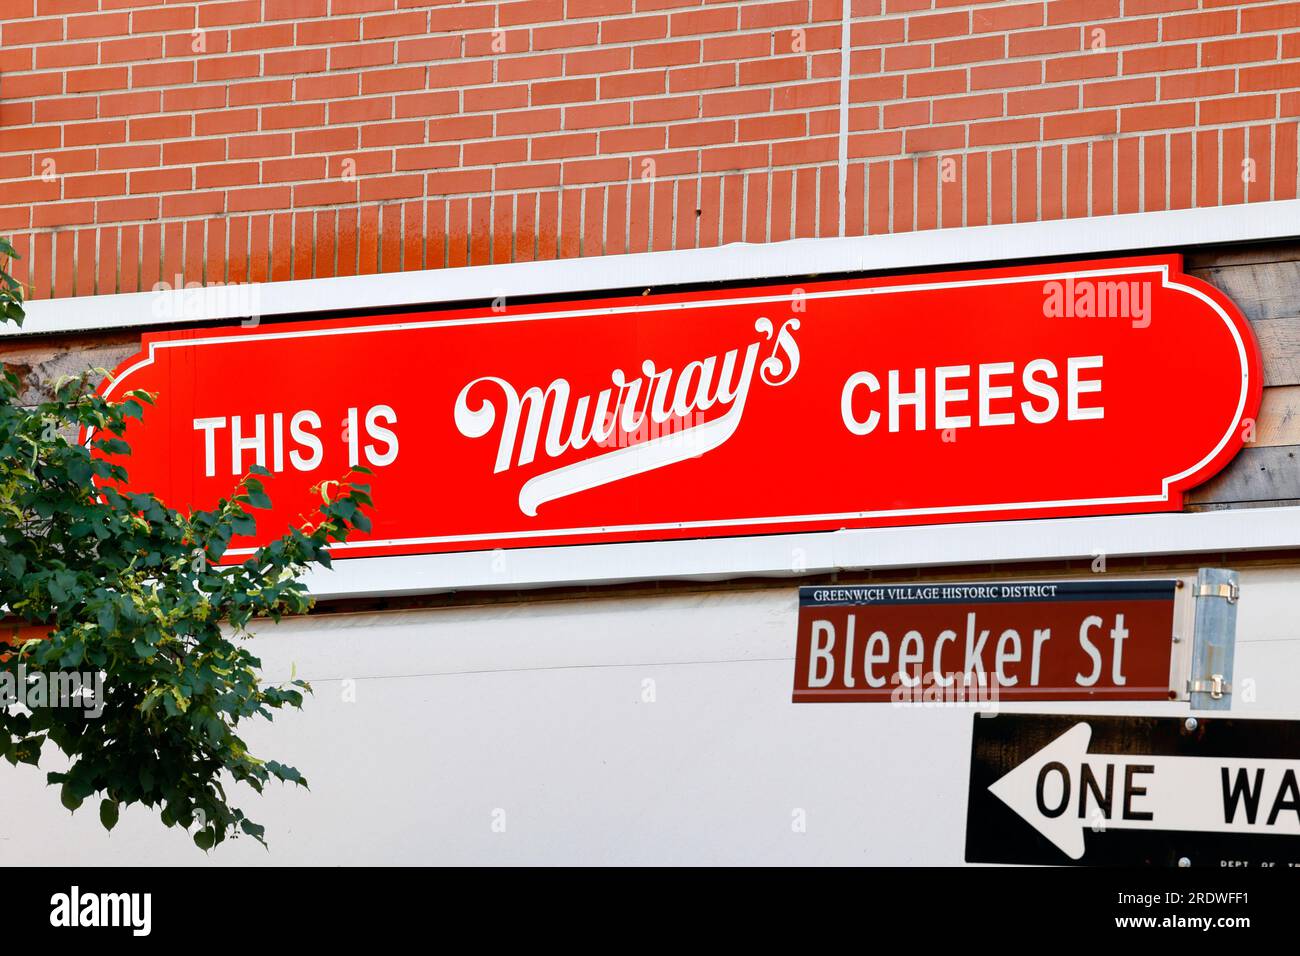 Signalisation pour Murray's Cheese, une fromagerie gastronomique située au 254 Bleecker St, New York. Banque D'Images